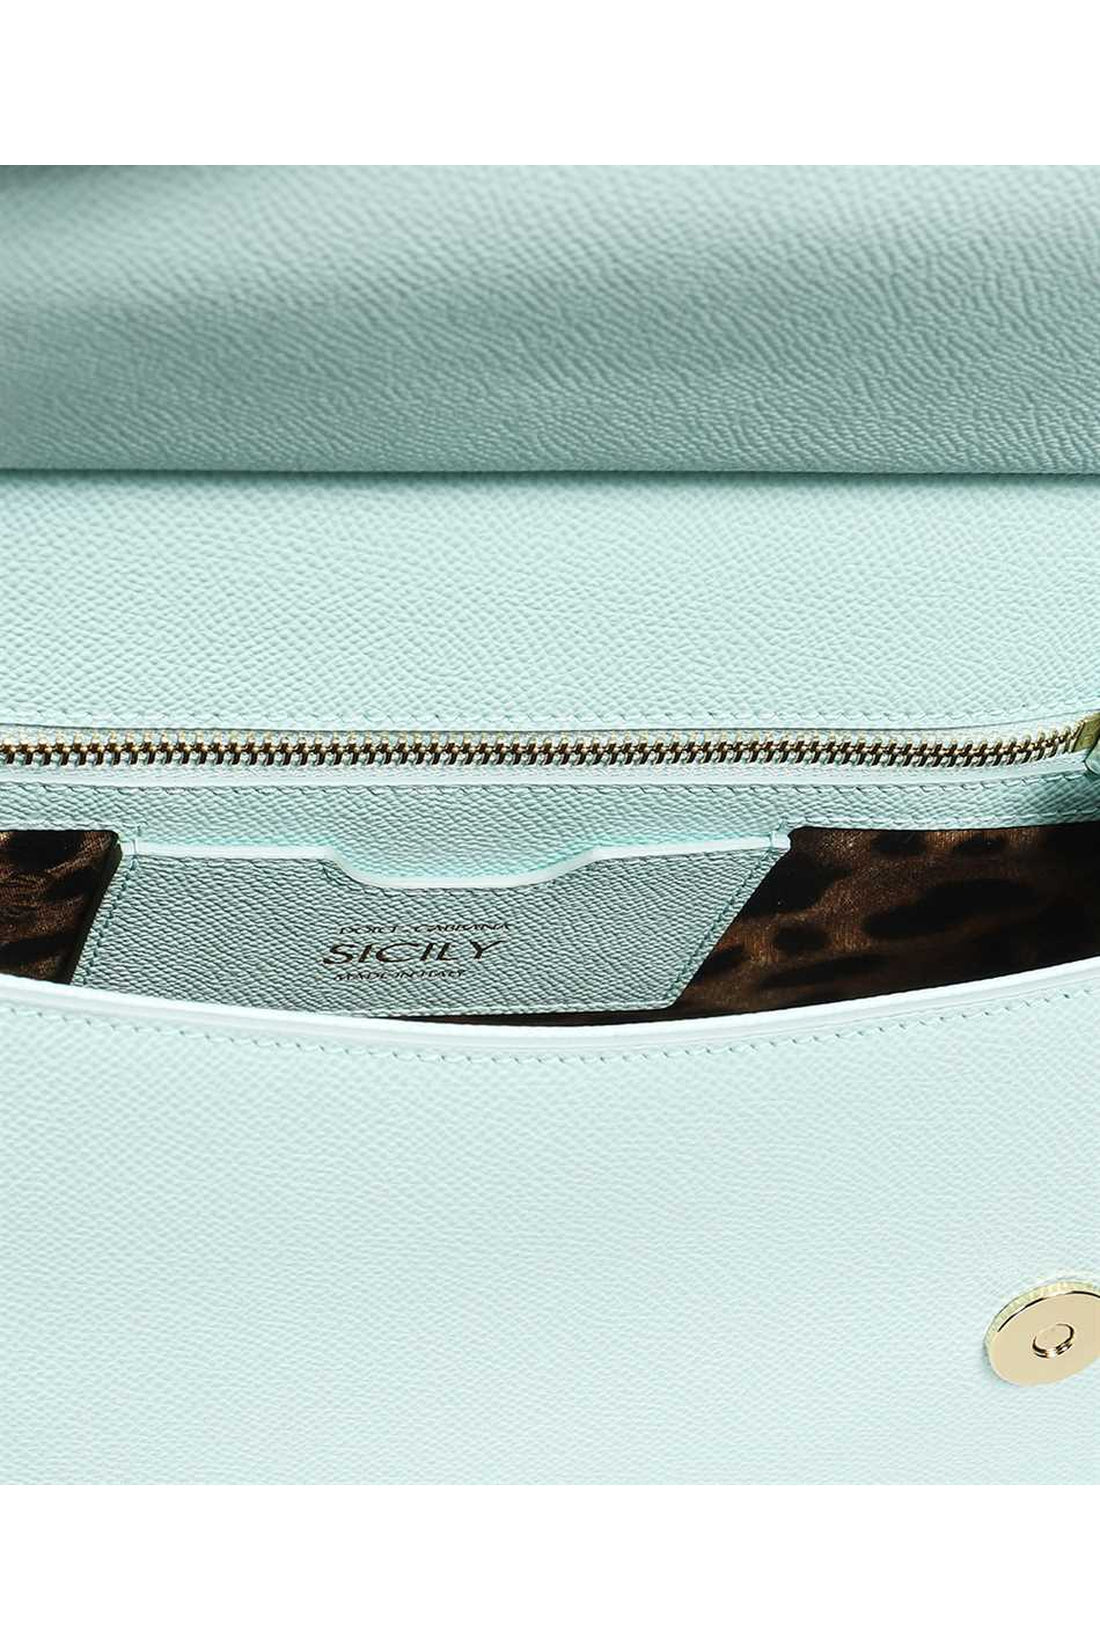 Dolce & Gabbana-OUTLET-SALE-Sicily leather handbag-ARCHIVIST